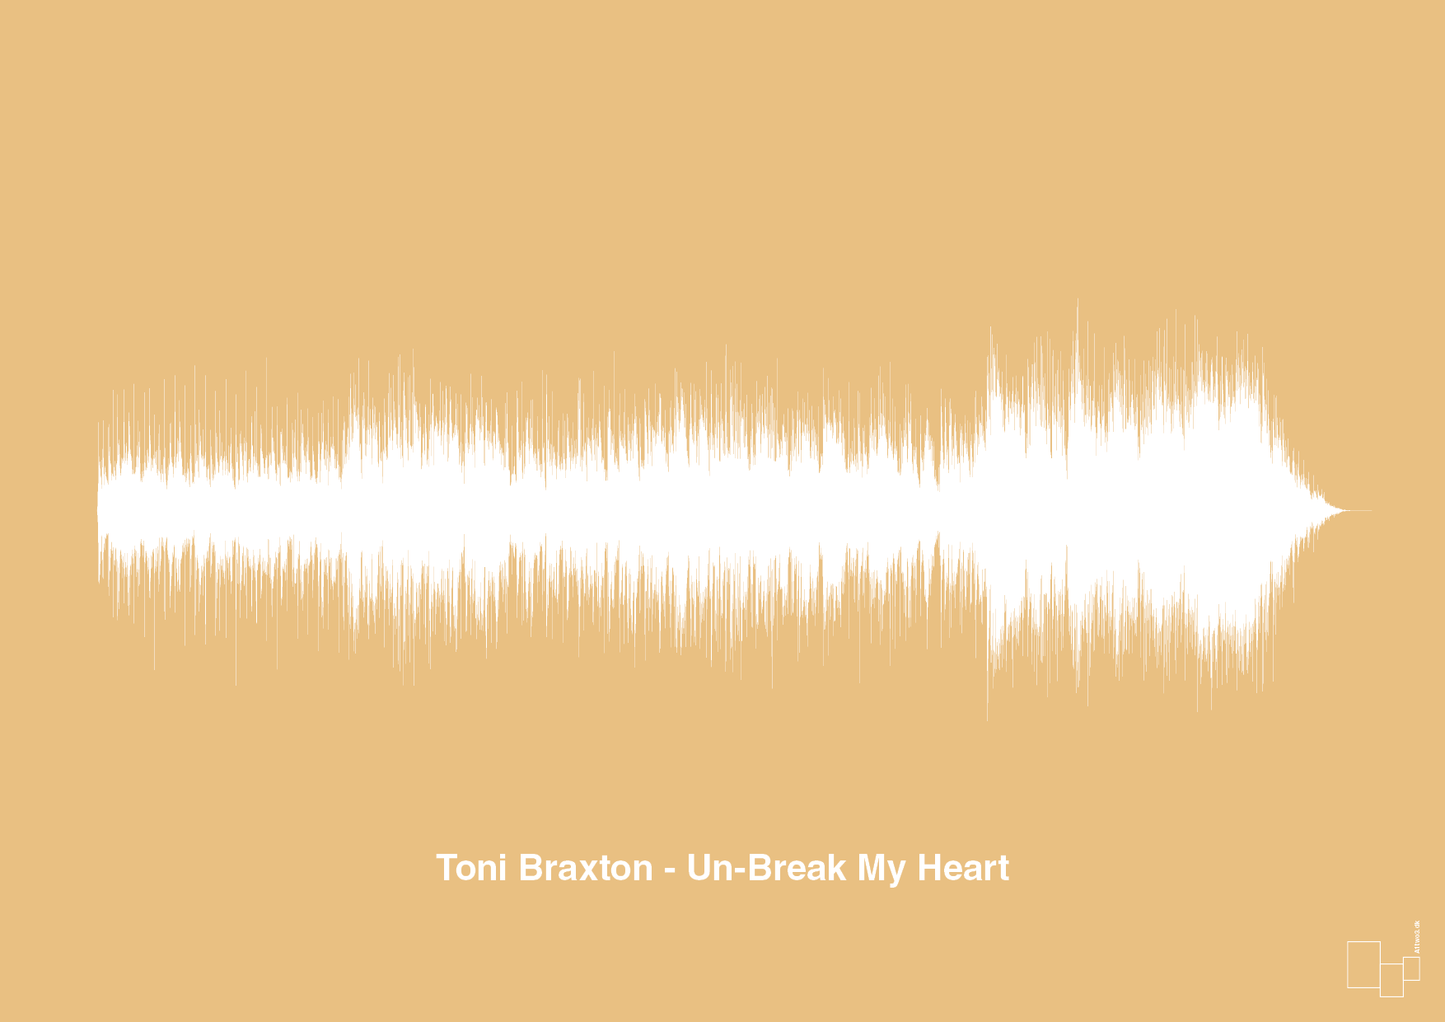 toni braxton - un-break my heart - Plakat med Musik i Charismatic